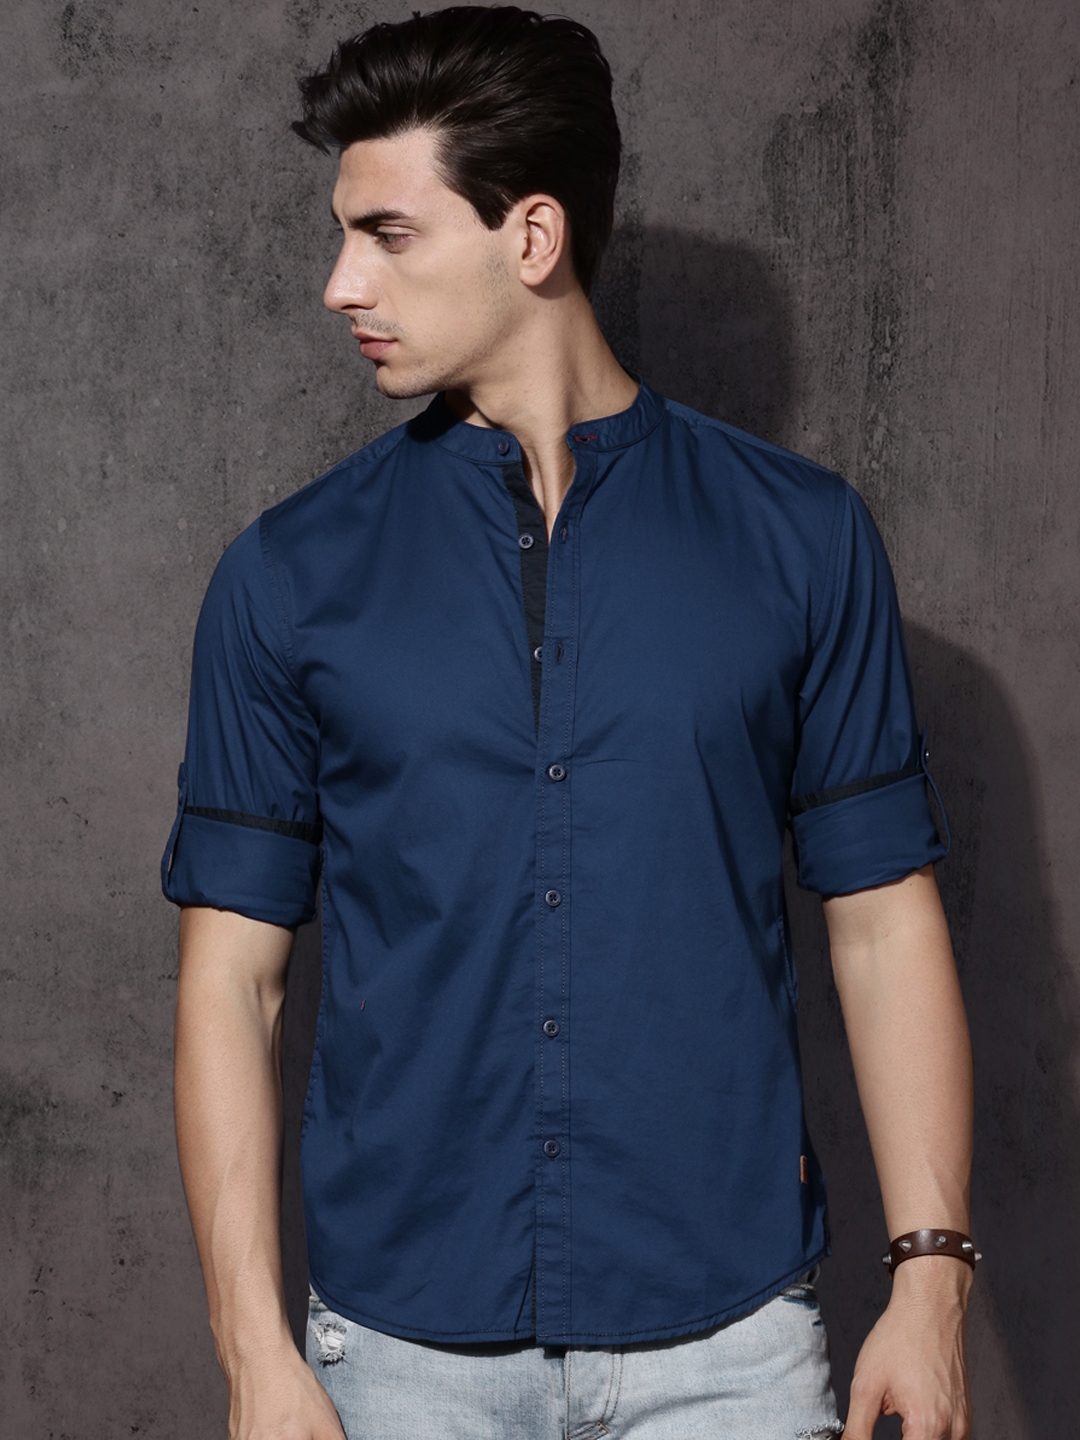 navy blue collared shirt